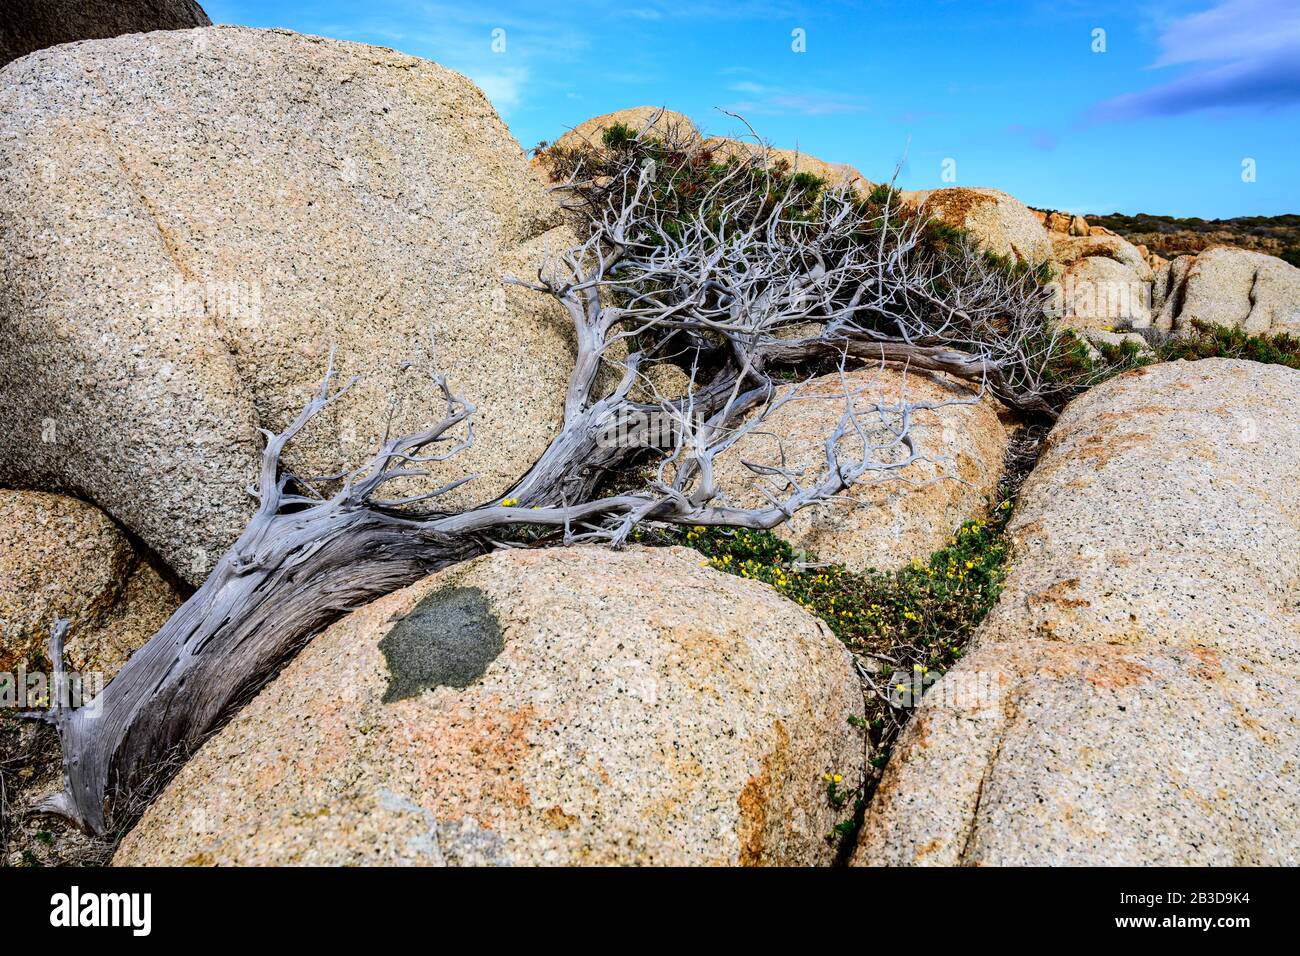 Juniper tree (Juniperus) growing sheltered from the wind between stones, windswept tree, Sardinia, Italy Stock Photo